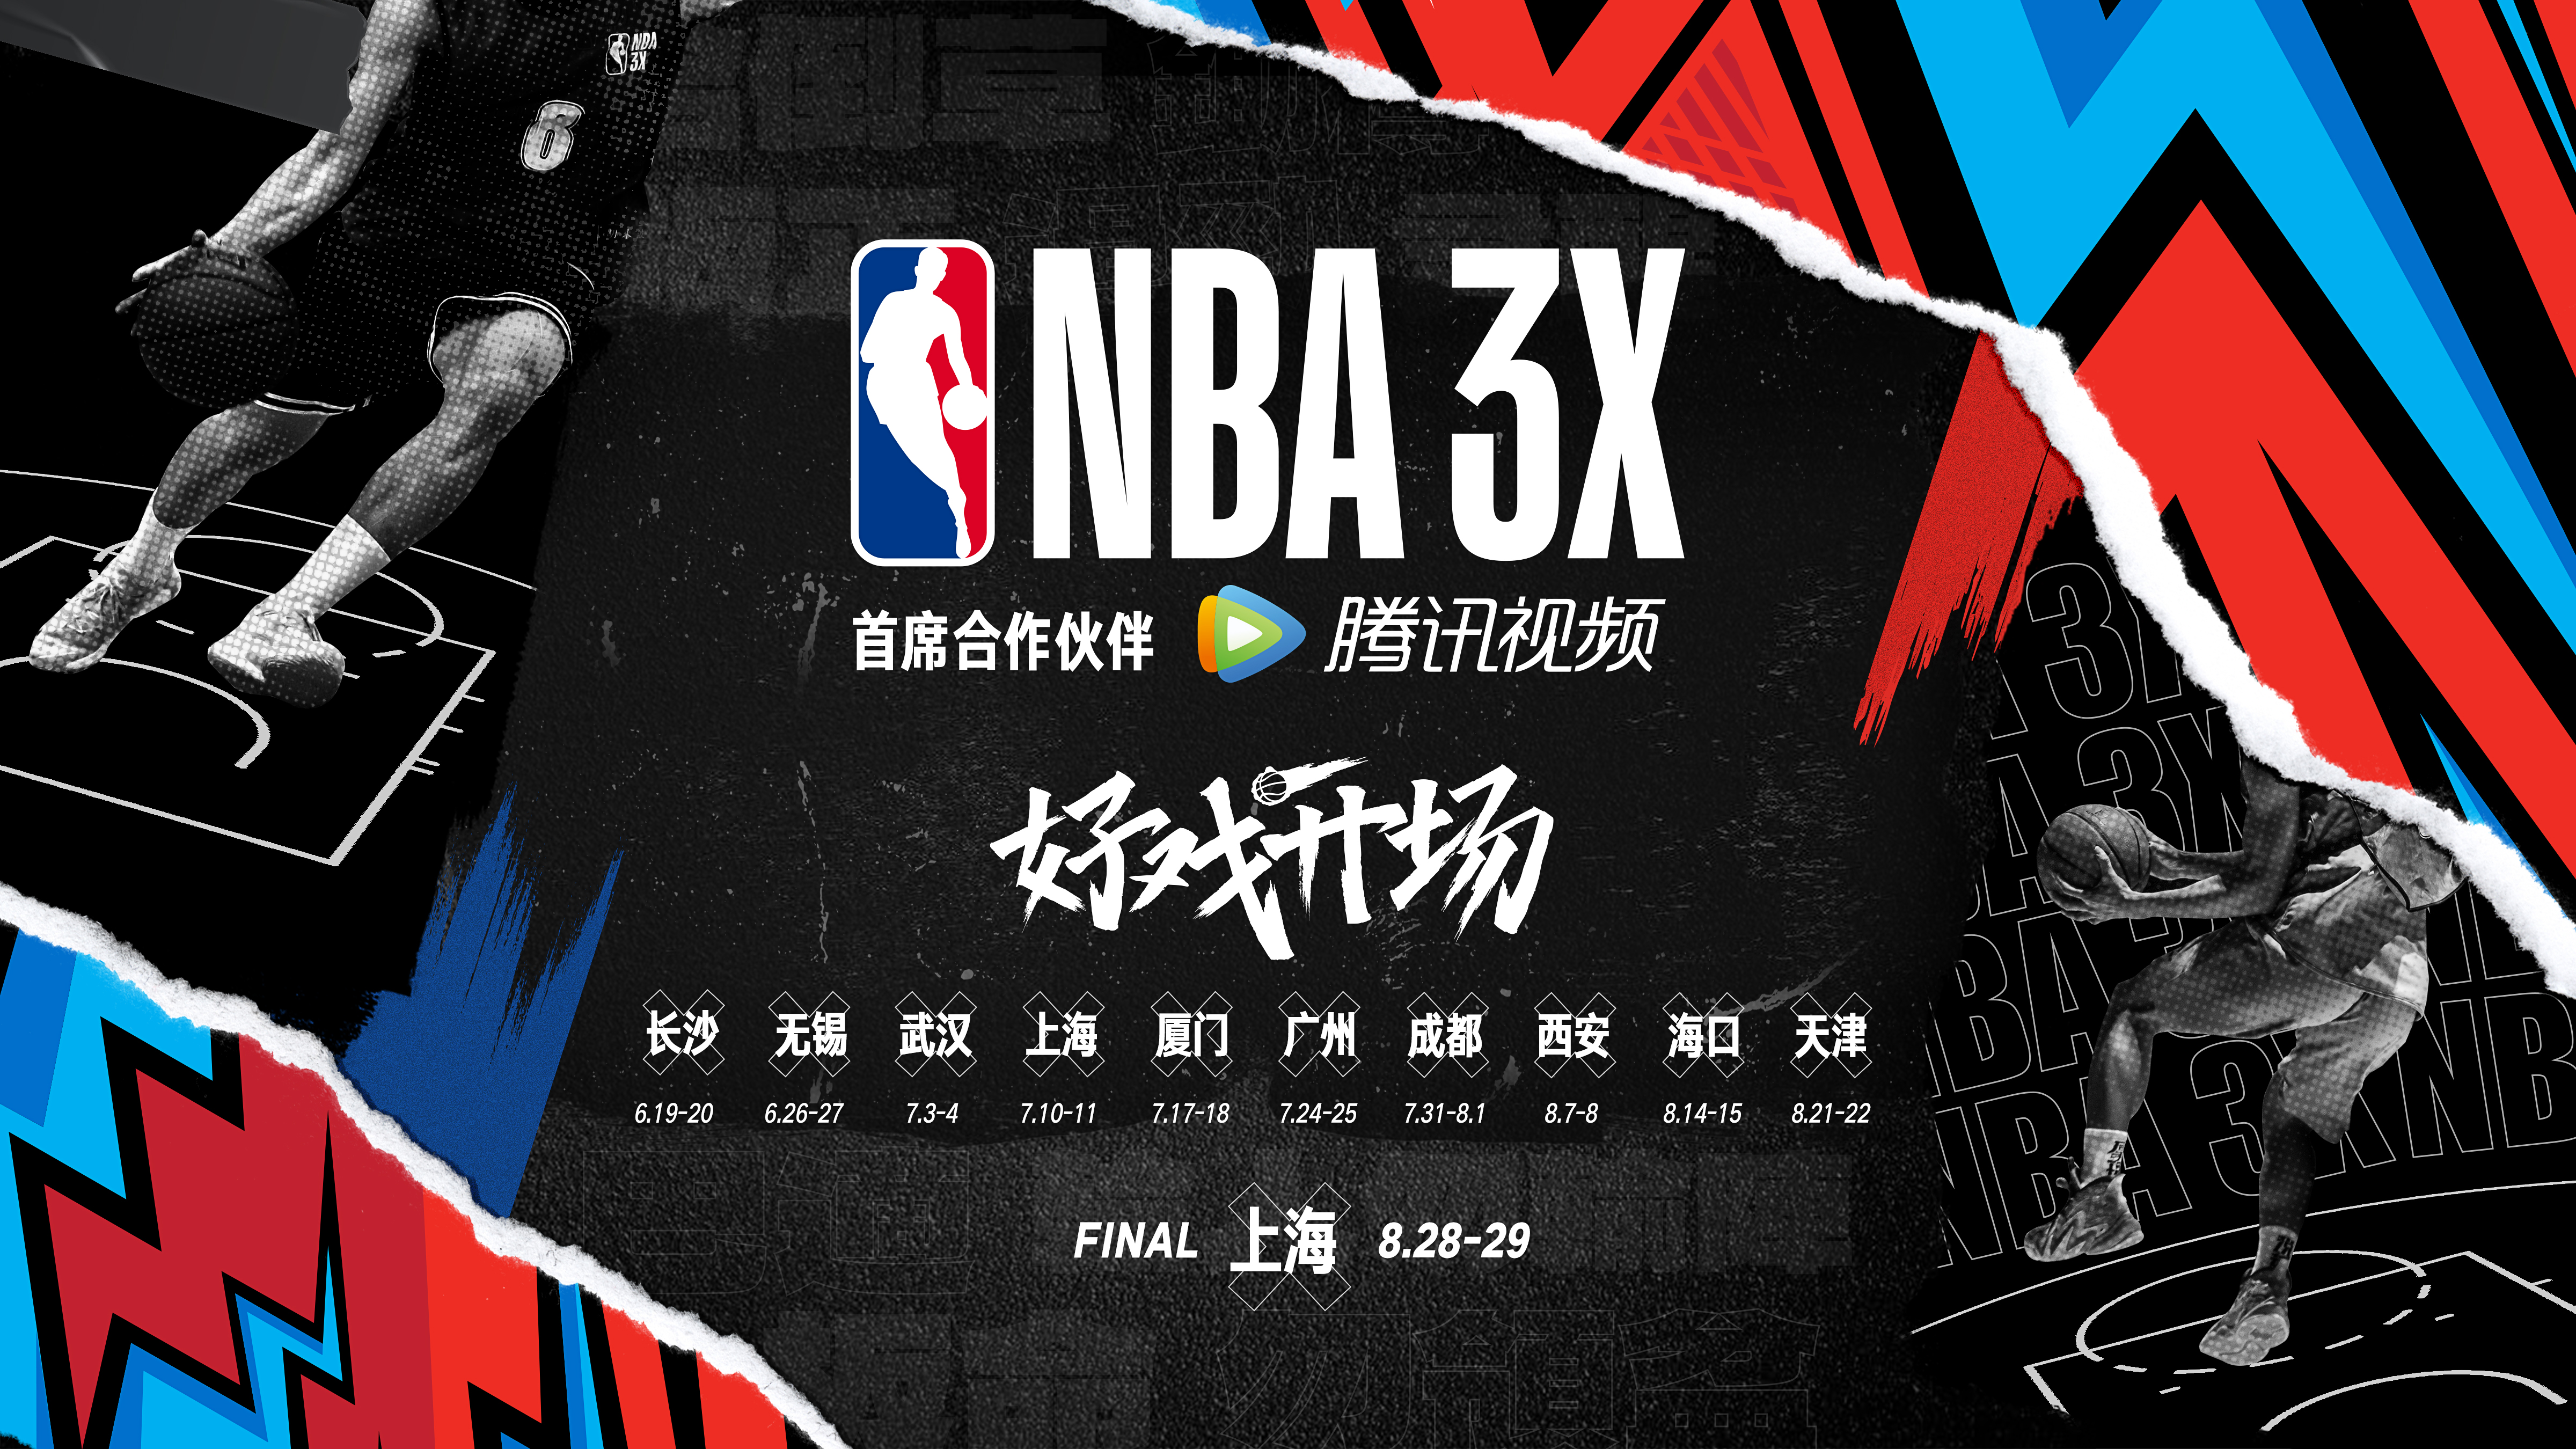 NBA 3X三人篮球挑战赛正式启动，腾讯视频将进行独家现场直播